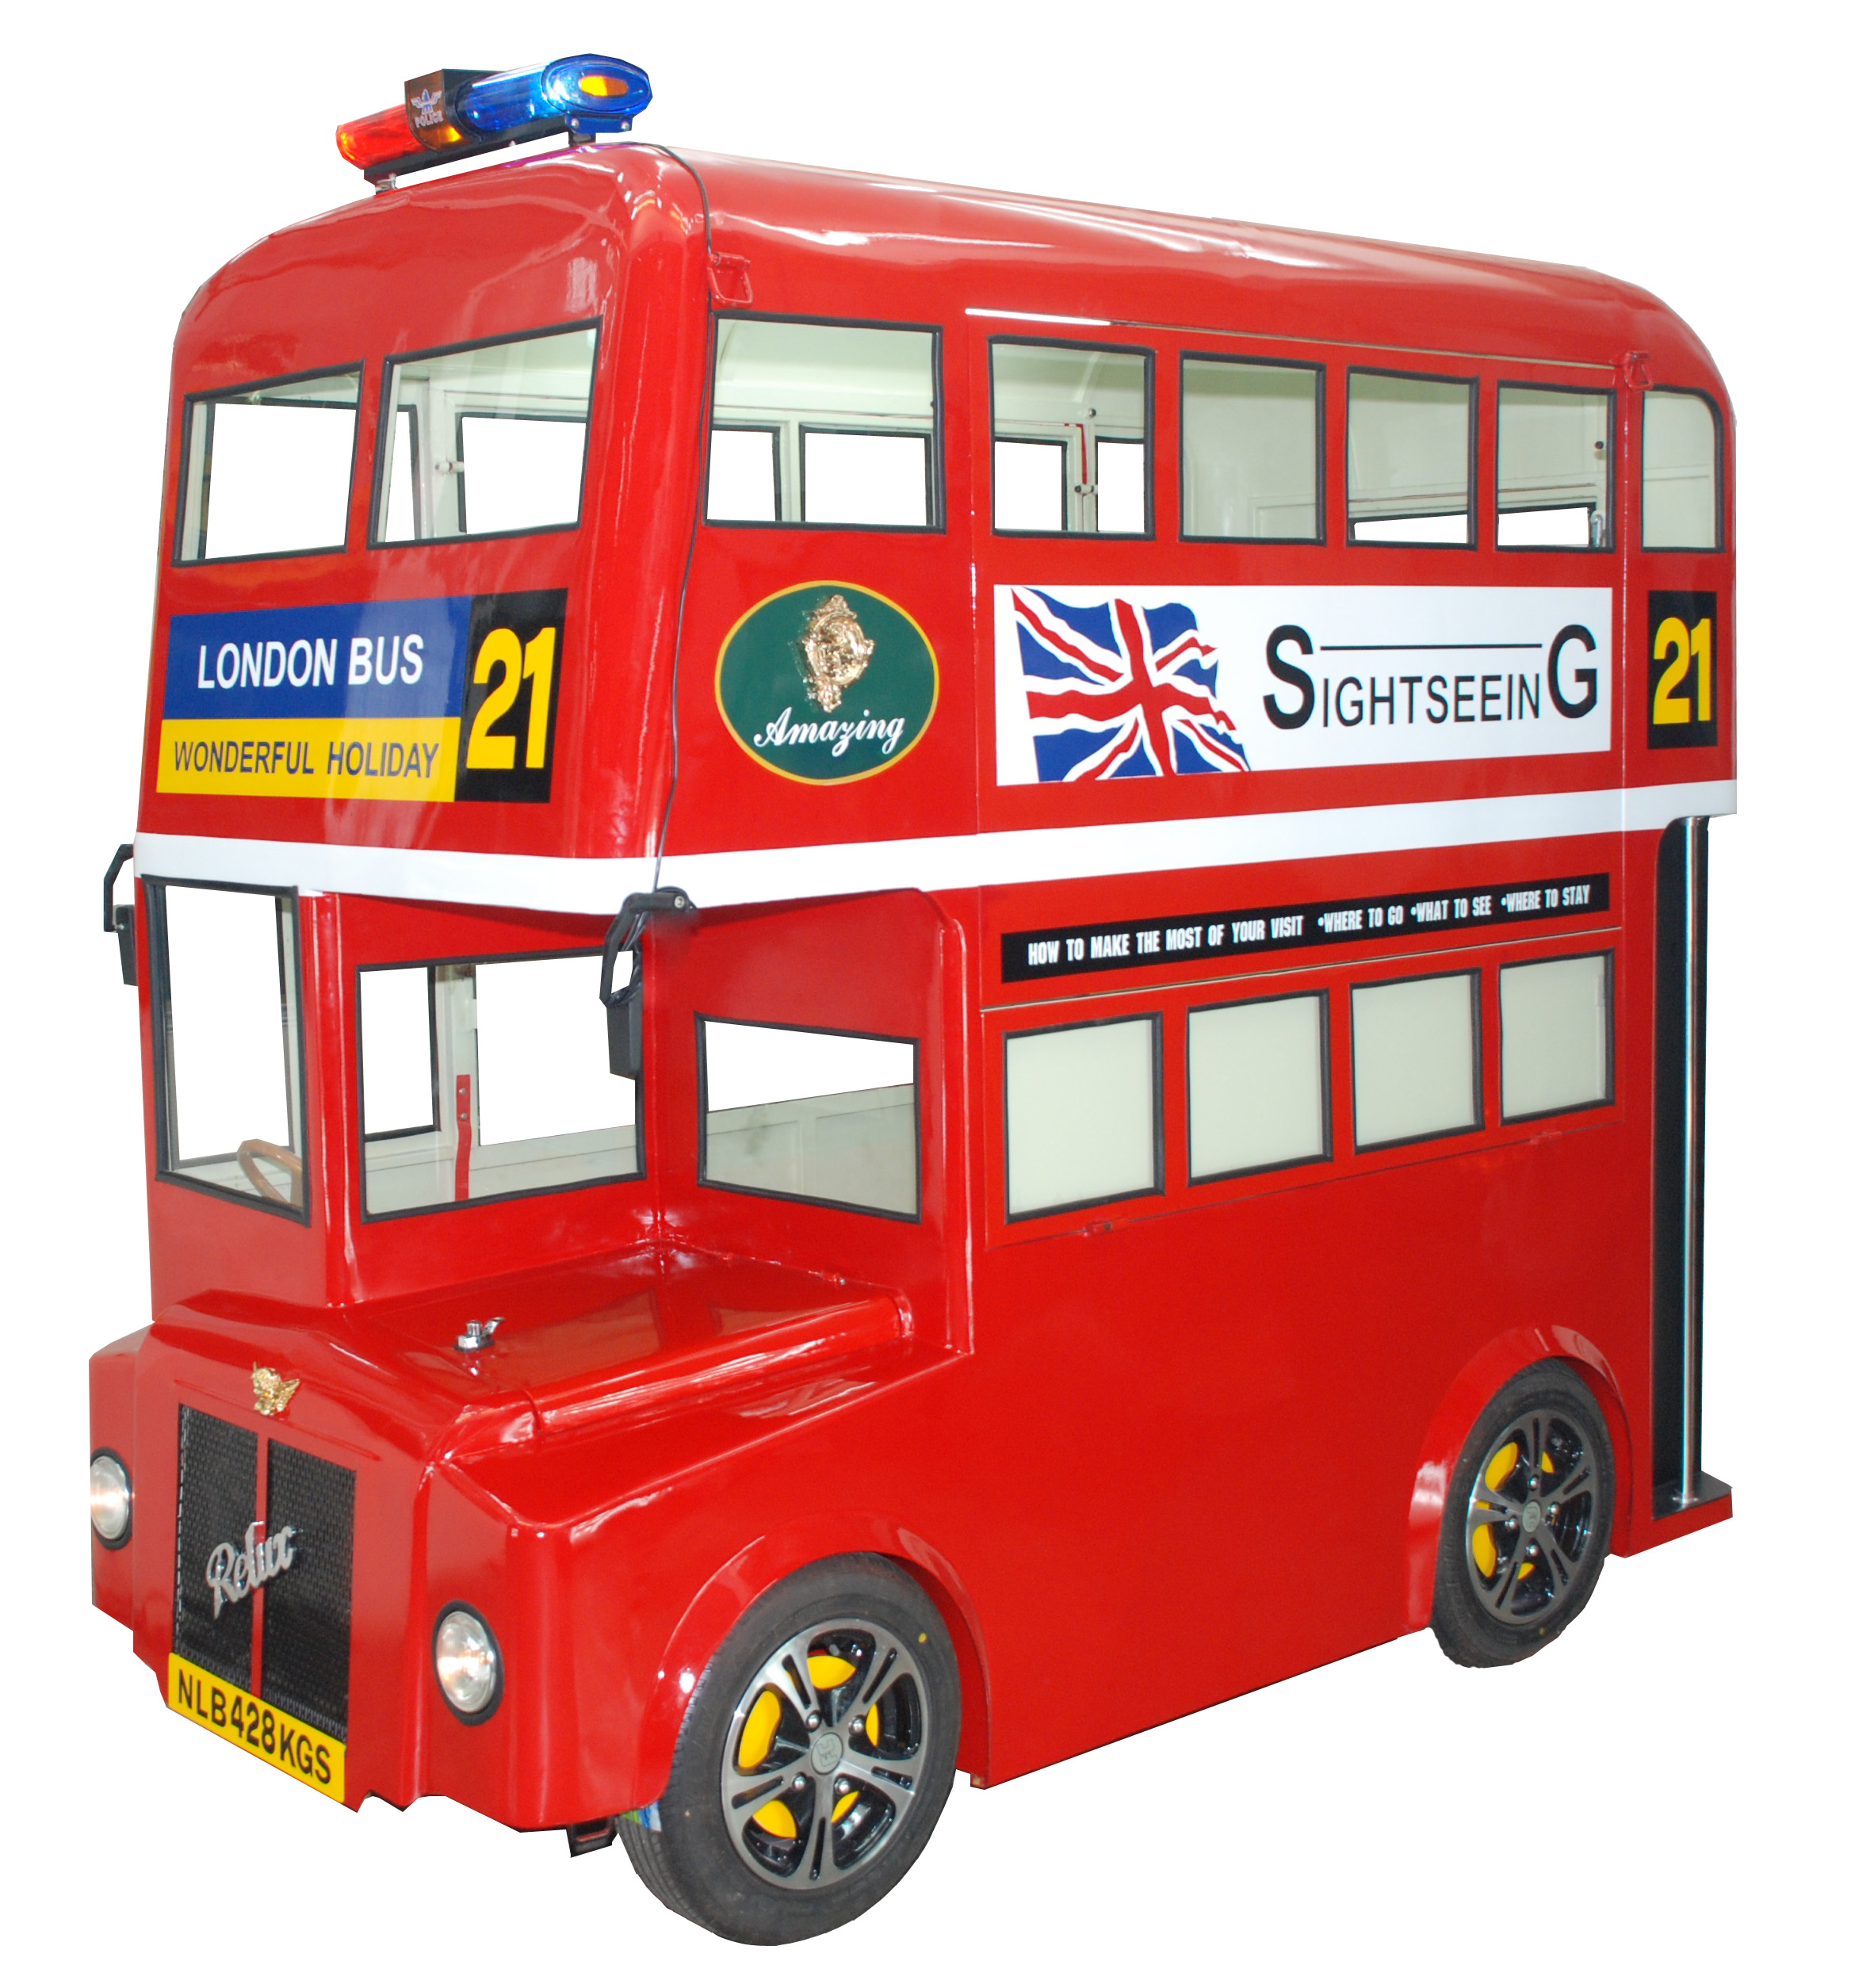 Relux รถเข็นเหล็กคีย์ออส สำหรับโชว์สินค้า/จำหน่ายสินค้า/เป็นเฟอร์นิเจอร์ รุ่น ลอนดอนบัส London Bus *สต็อกราคาพิเศษ ดัดแปลงไม่ได้*